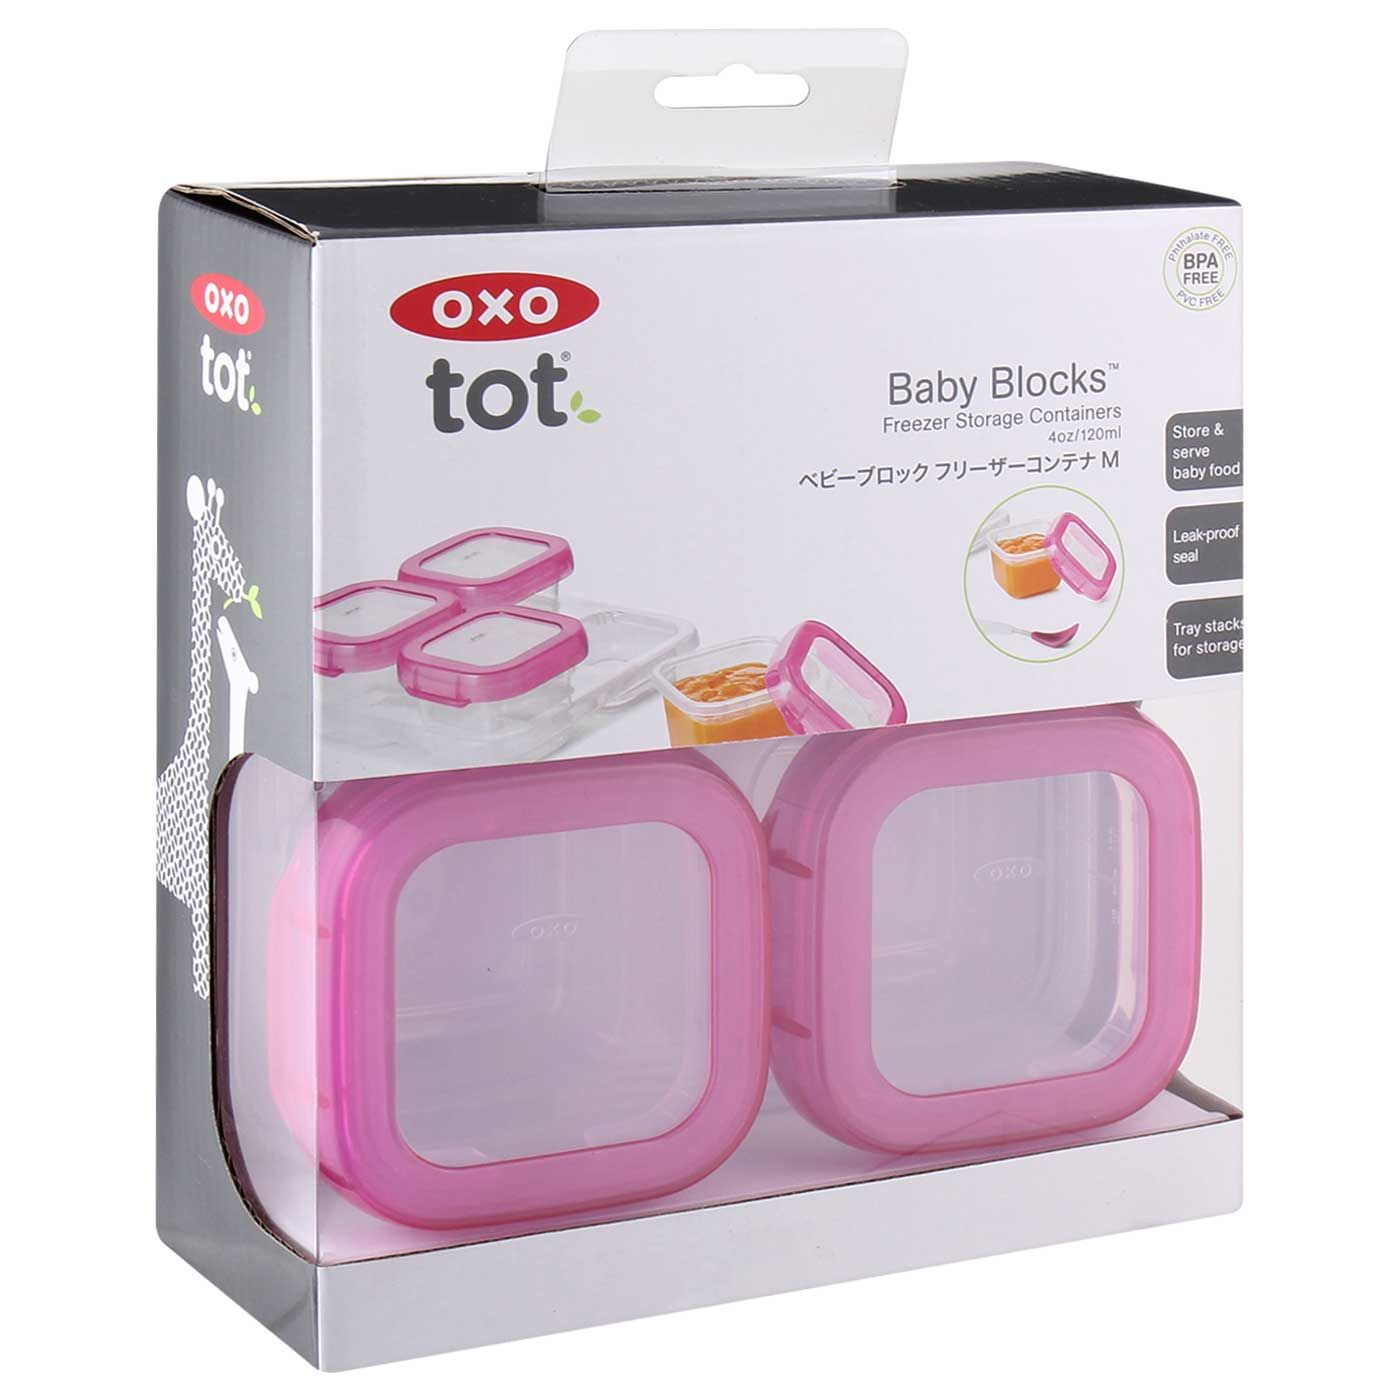 OXO Tot Baby Blocks Freezer Storage Containers 4oz Pink - 3